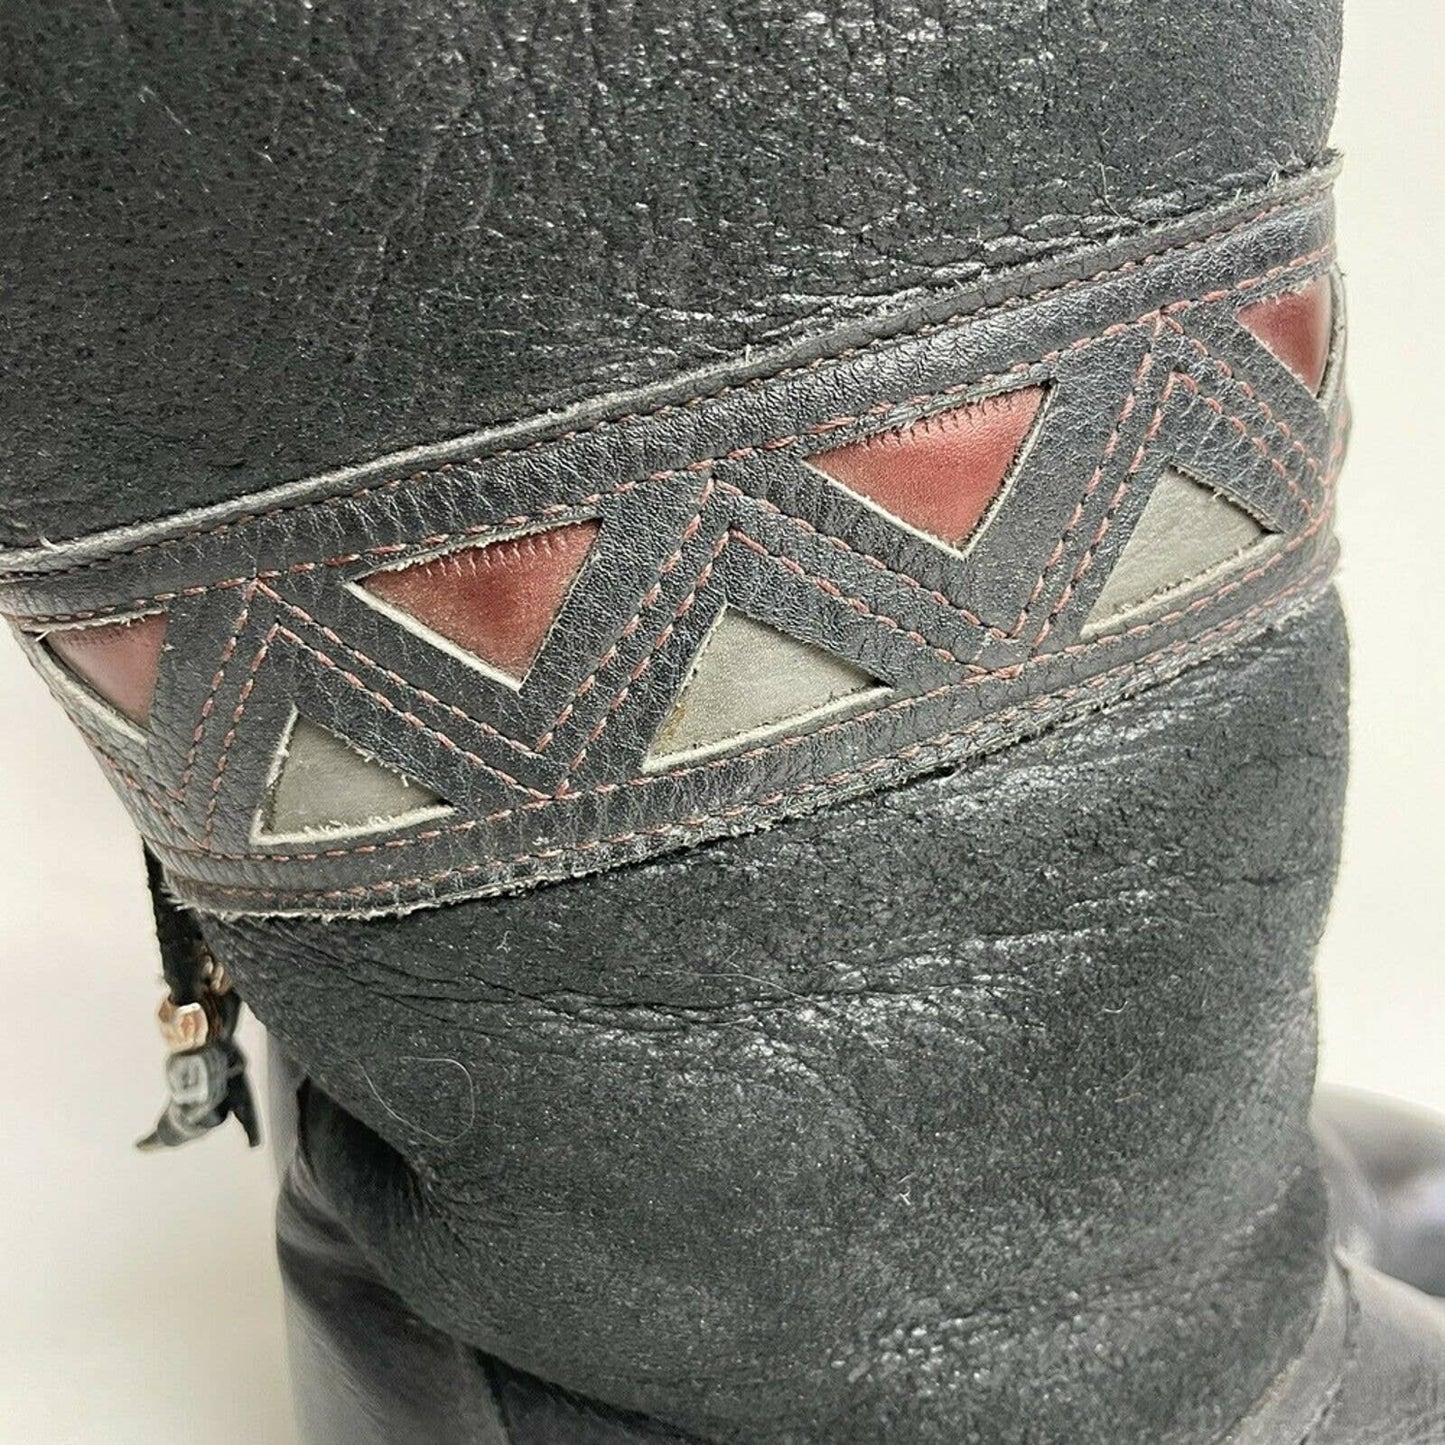 Vintage Sorel Sheepskin Boots Black 1980s Geometric Contrast Triangle 8.5